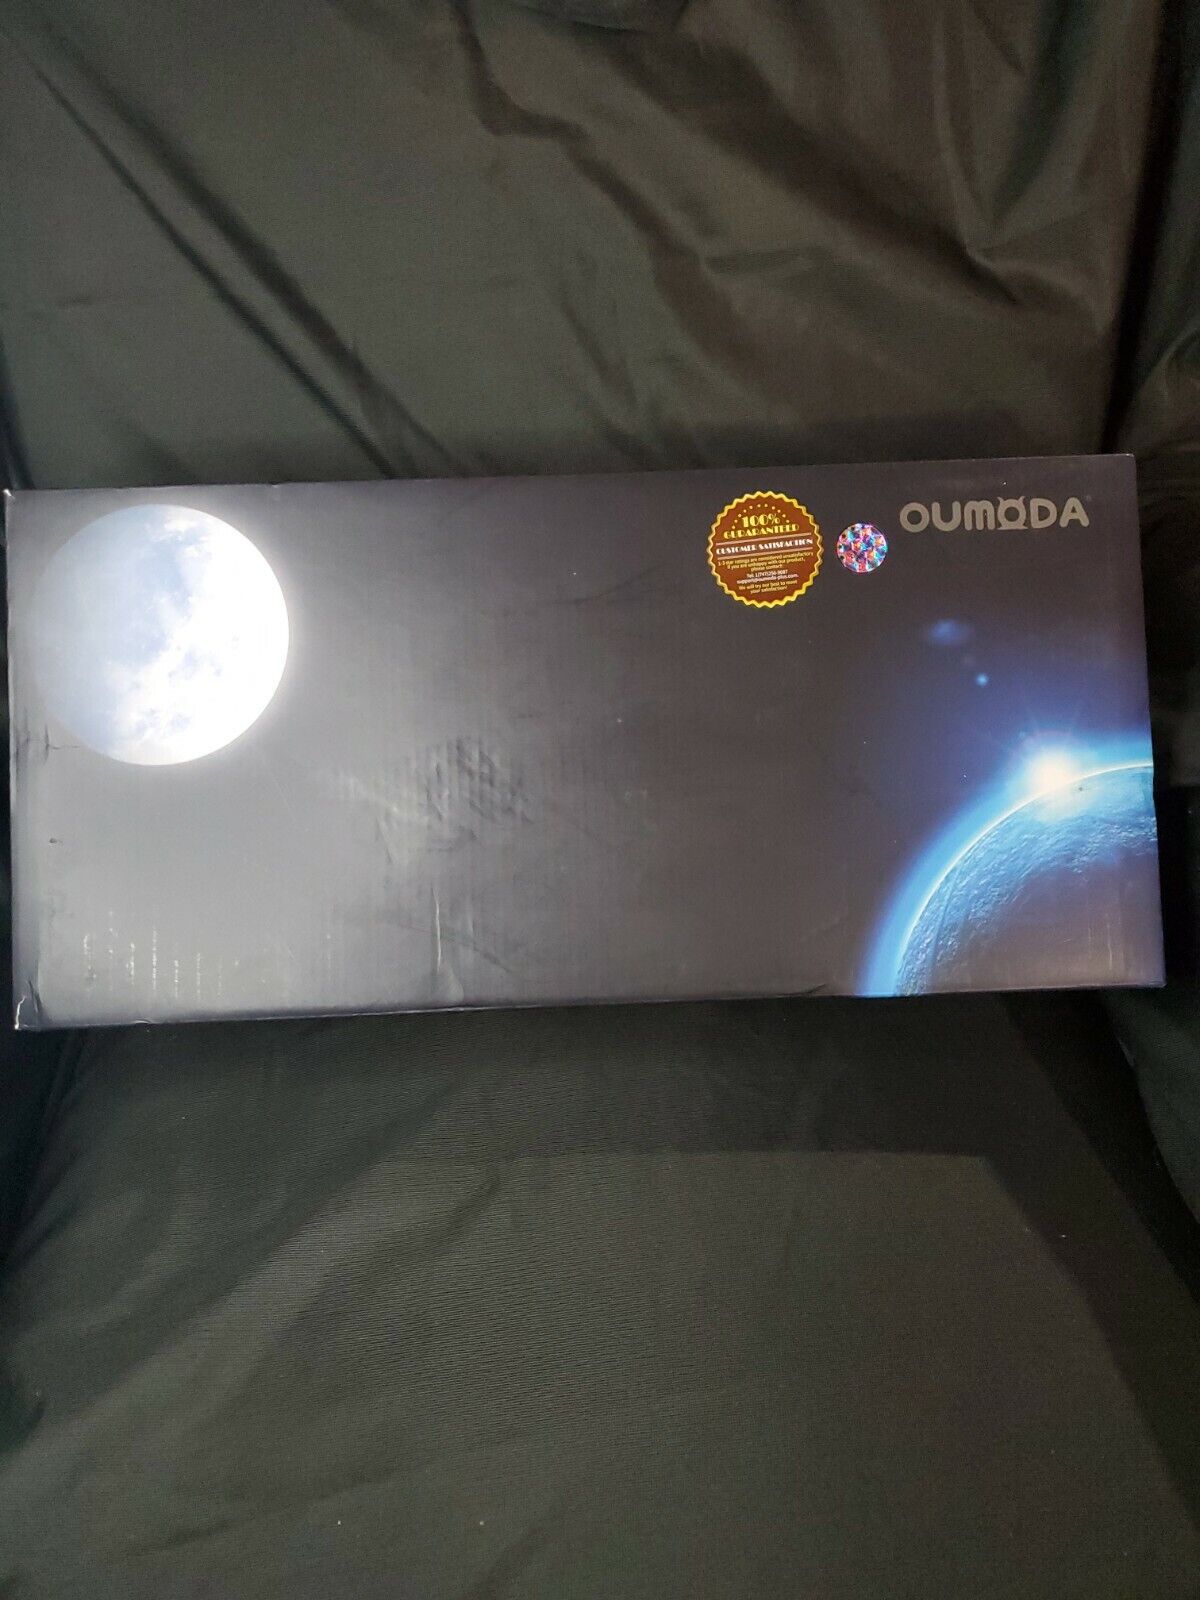  Oumoda Model F36050 Refraction Astronomical Travel Telescope Silver 